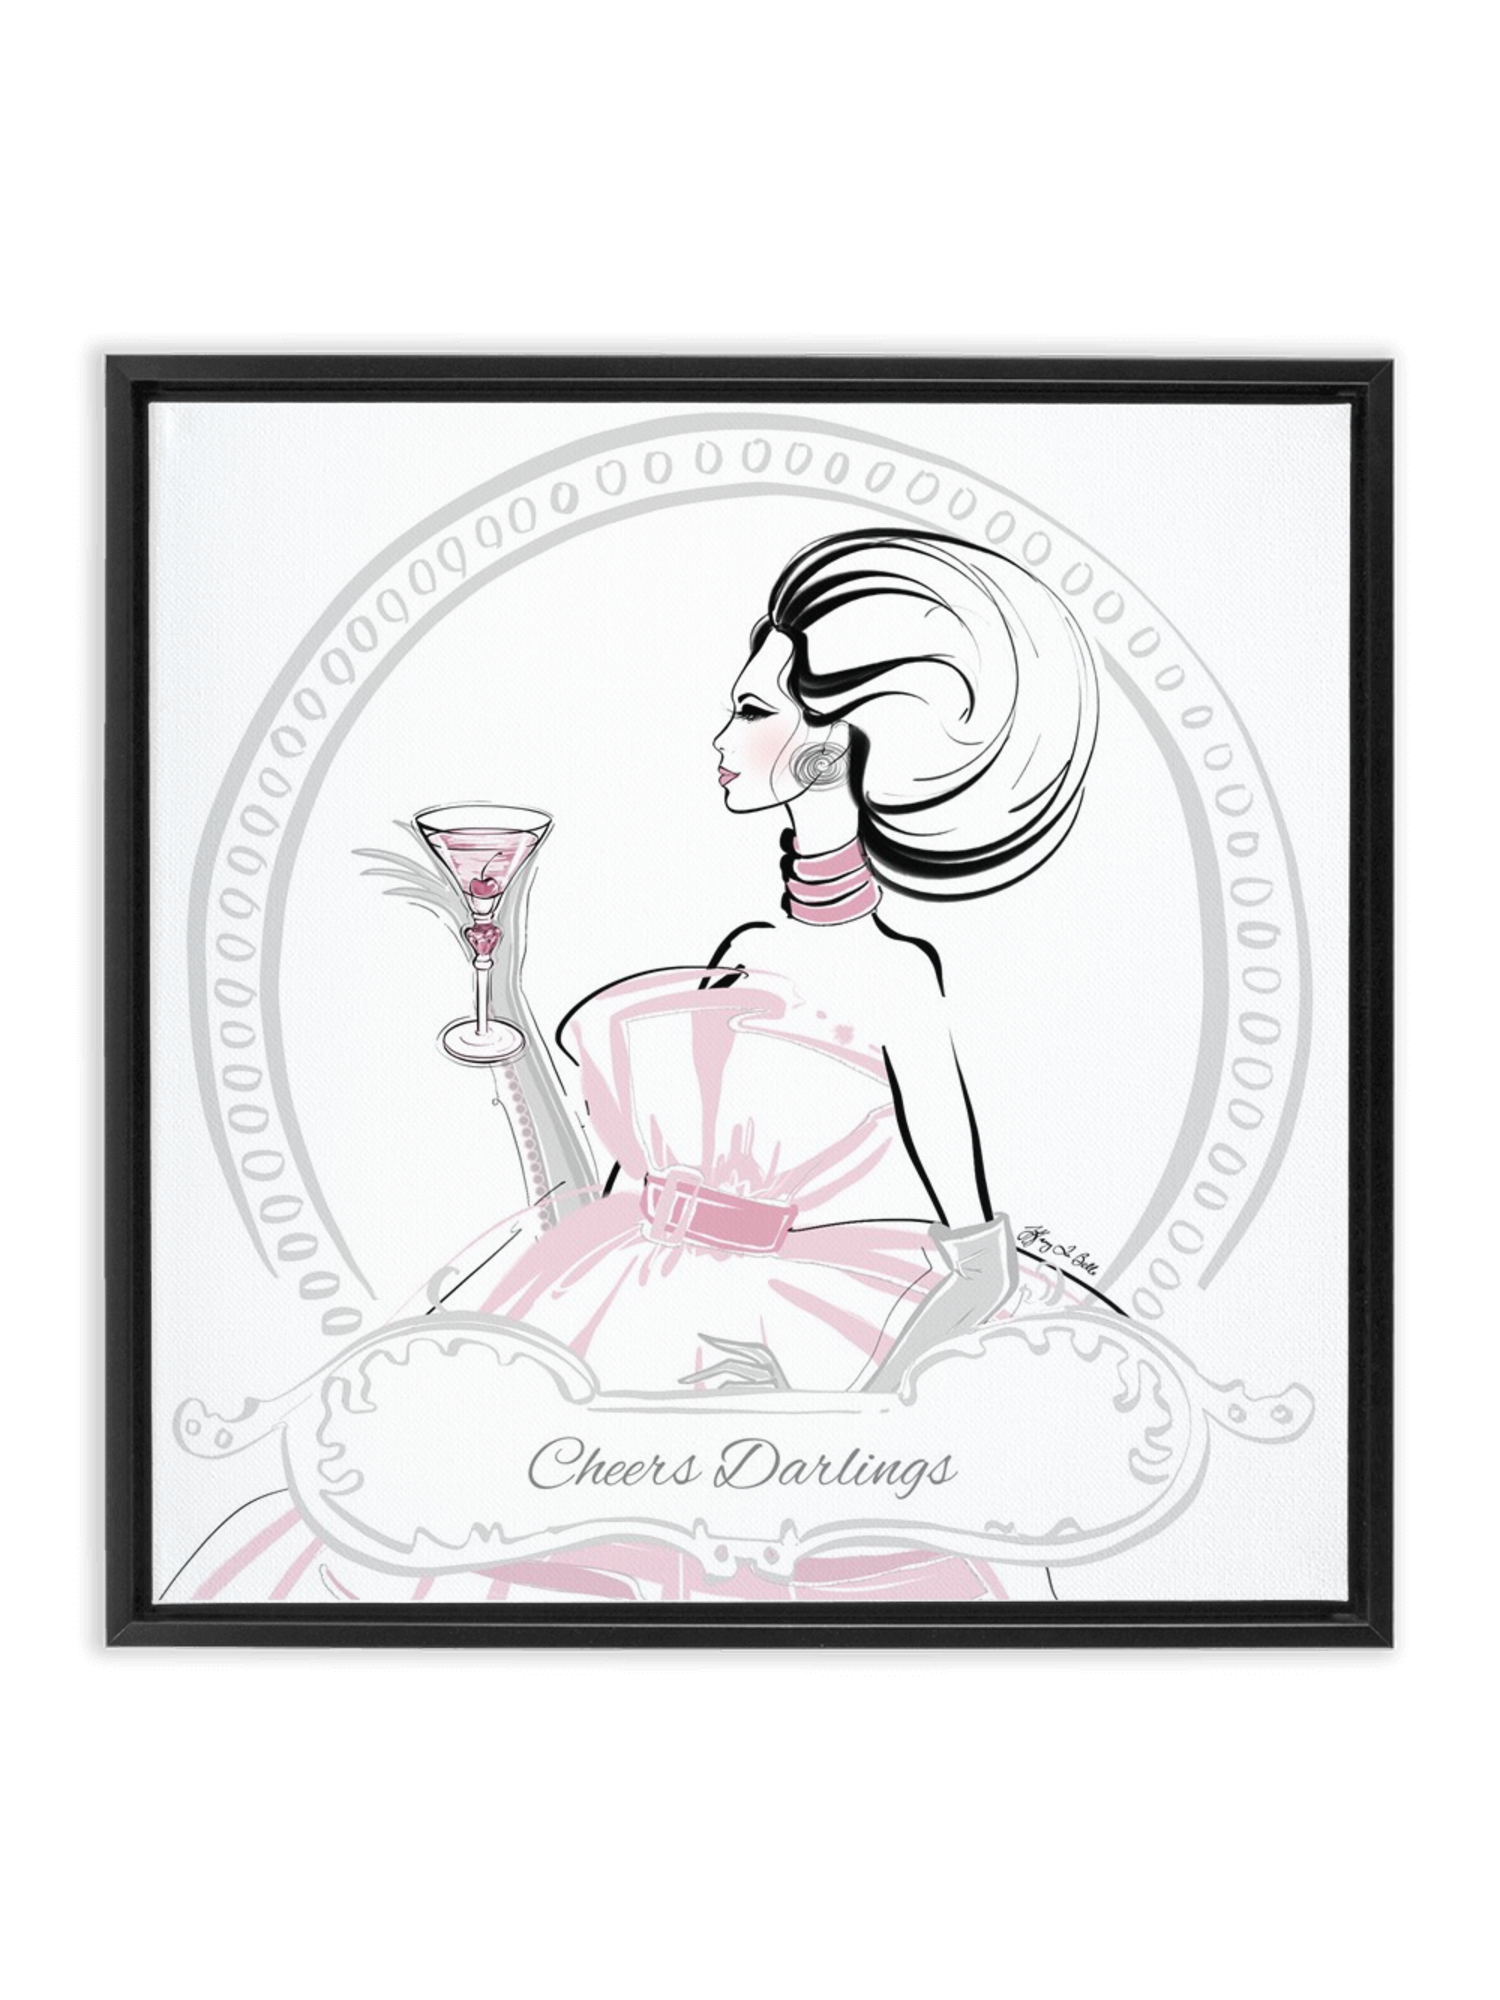 Cheers Darlings - Illustration - Canvas Gallery Print - Unframed or Framed - Tiffany La Belle